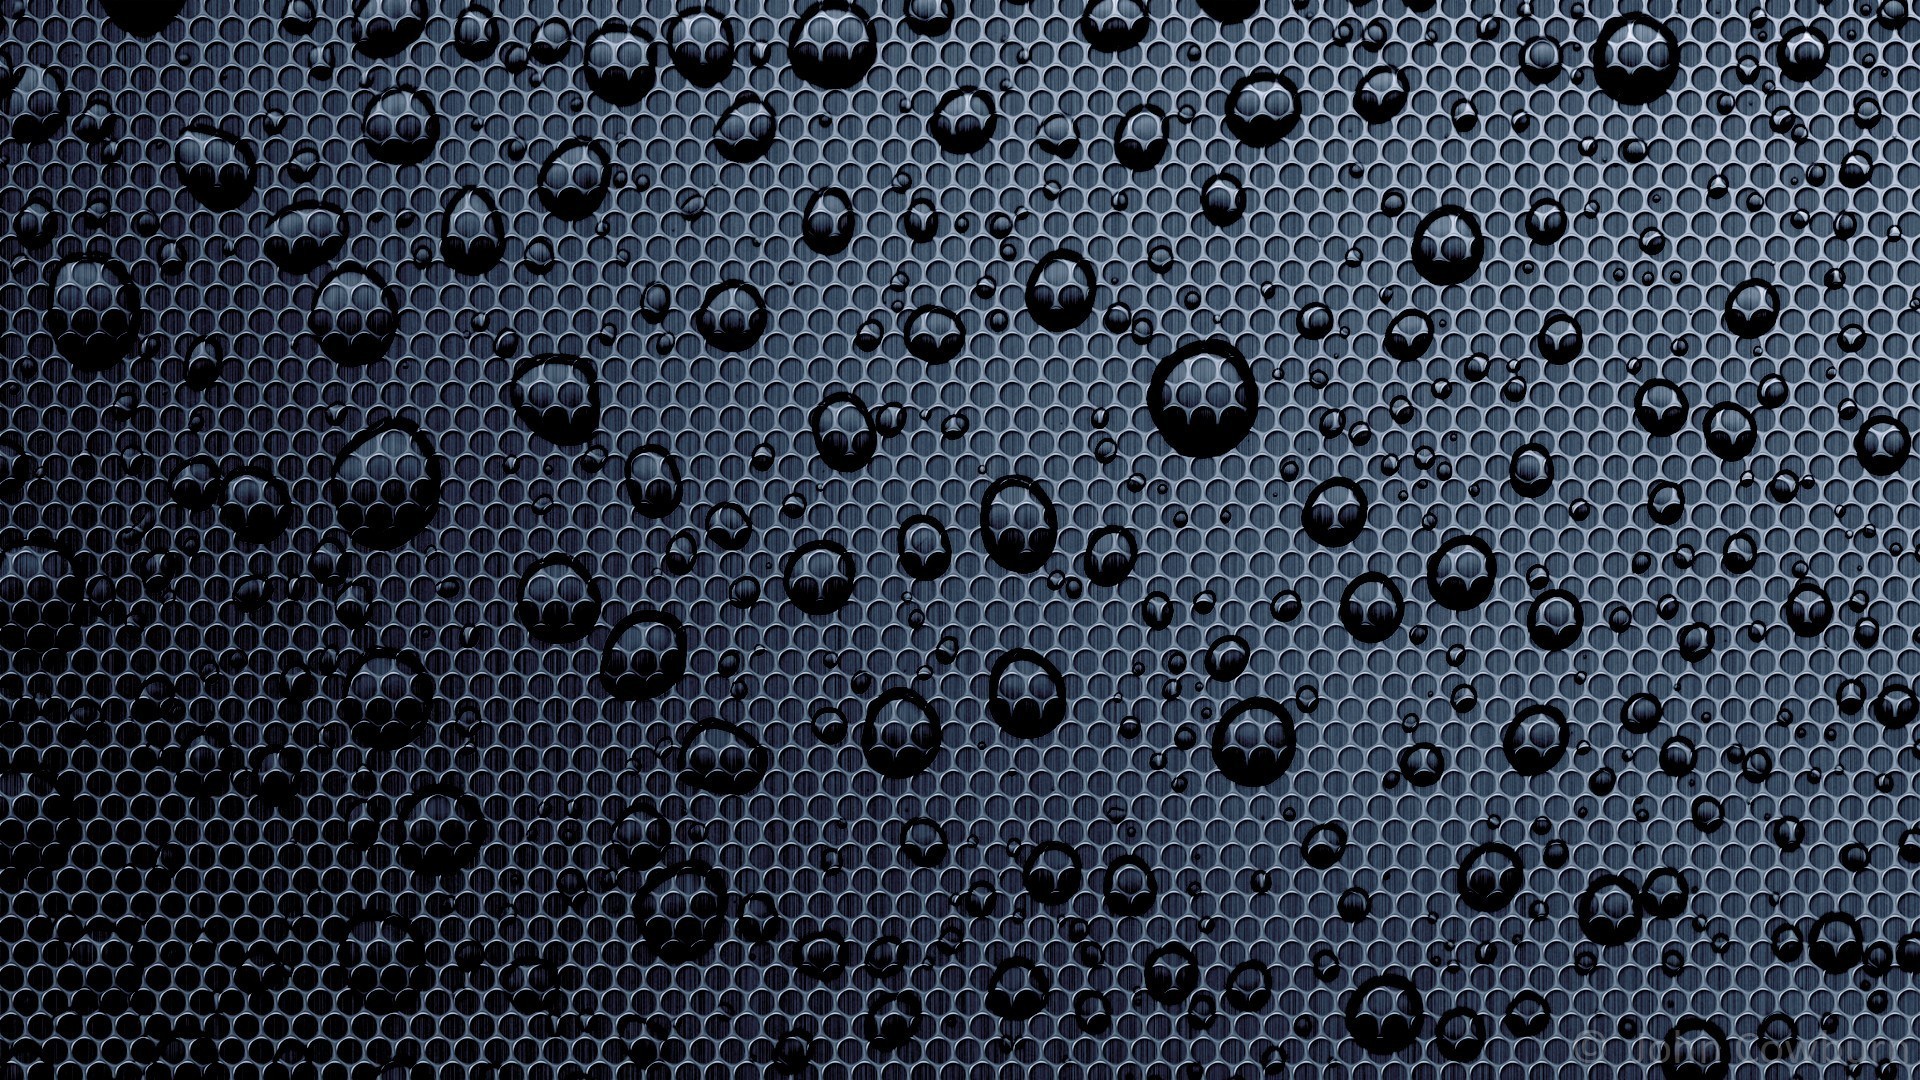 General 1920x1080 water drops abstract digital art